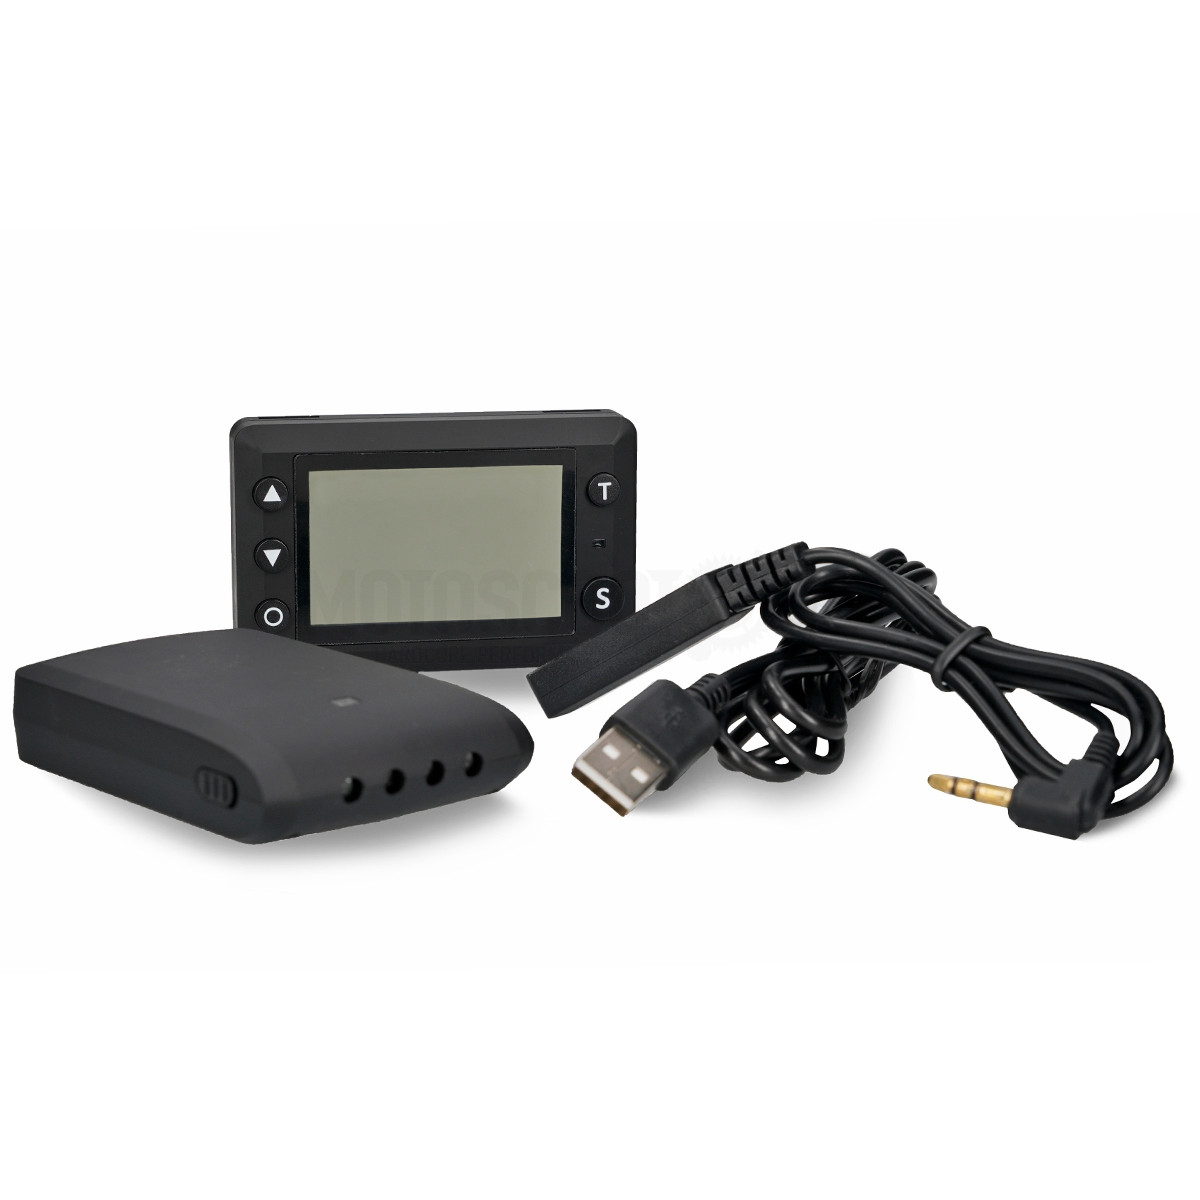 Laptimer VOCA Eagle Eye pantalla 2.2 conexión USB kit plug & play ref: VCR-RD11LAP/EGL